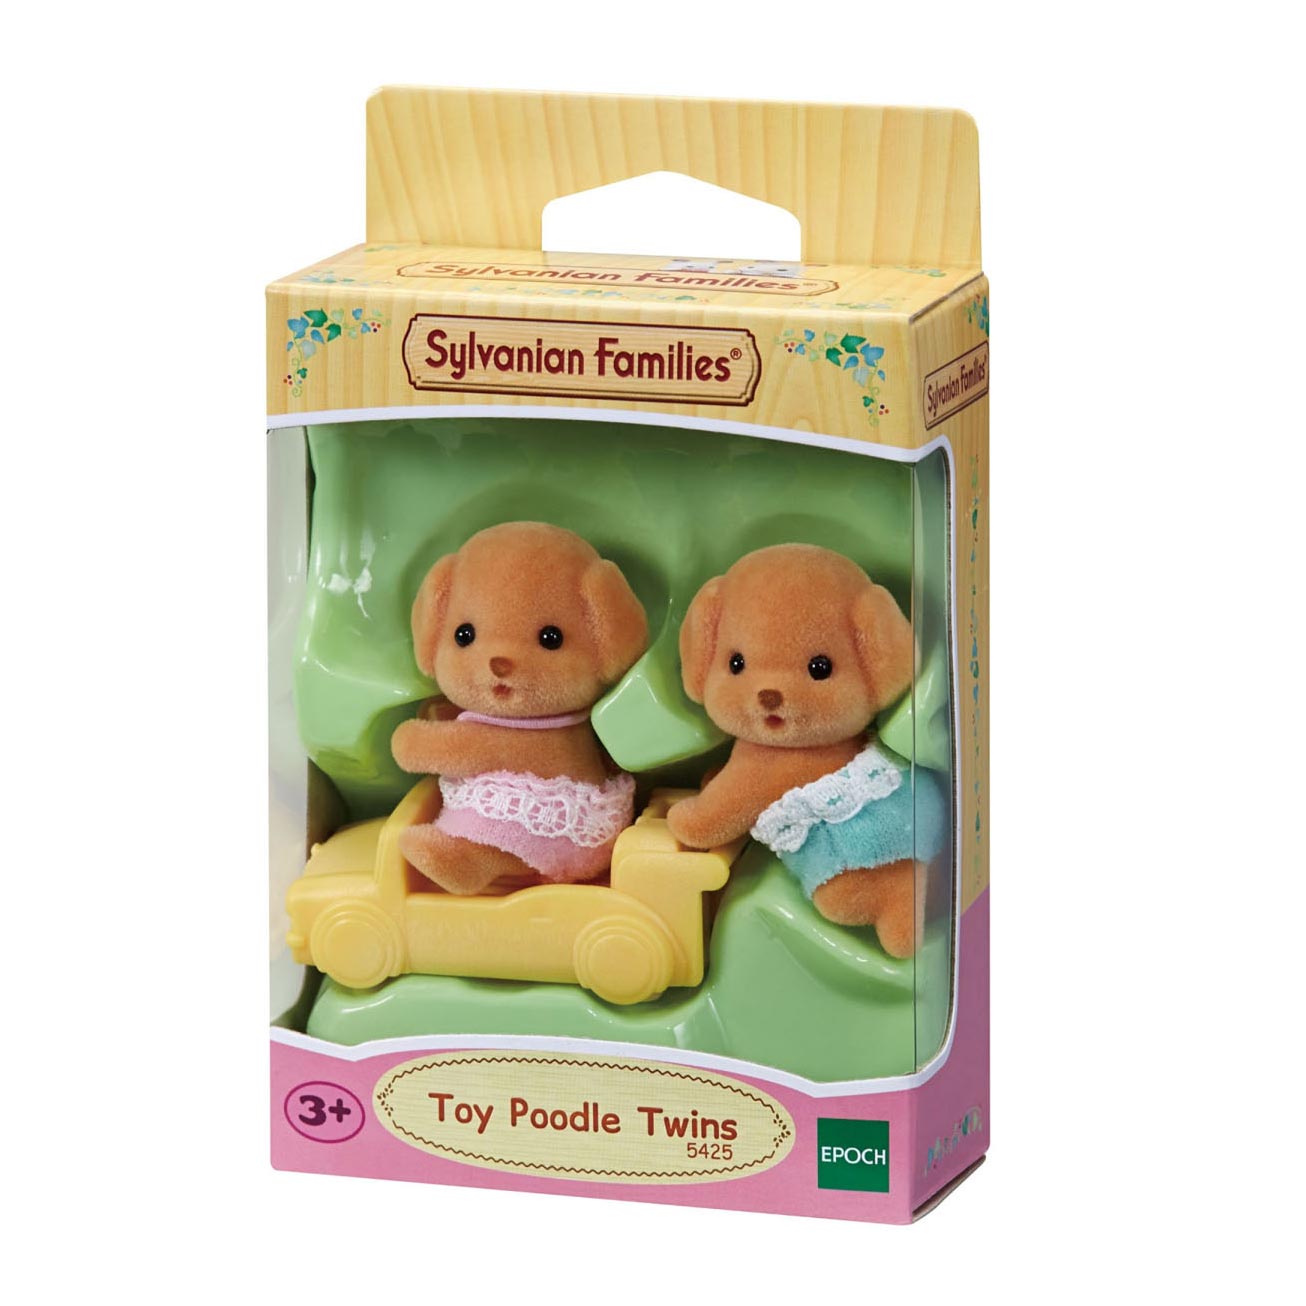 sylvanian families toy poodle twins